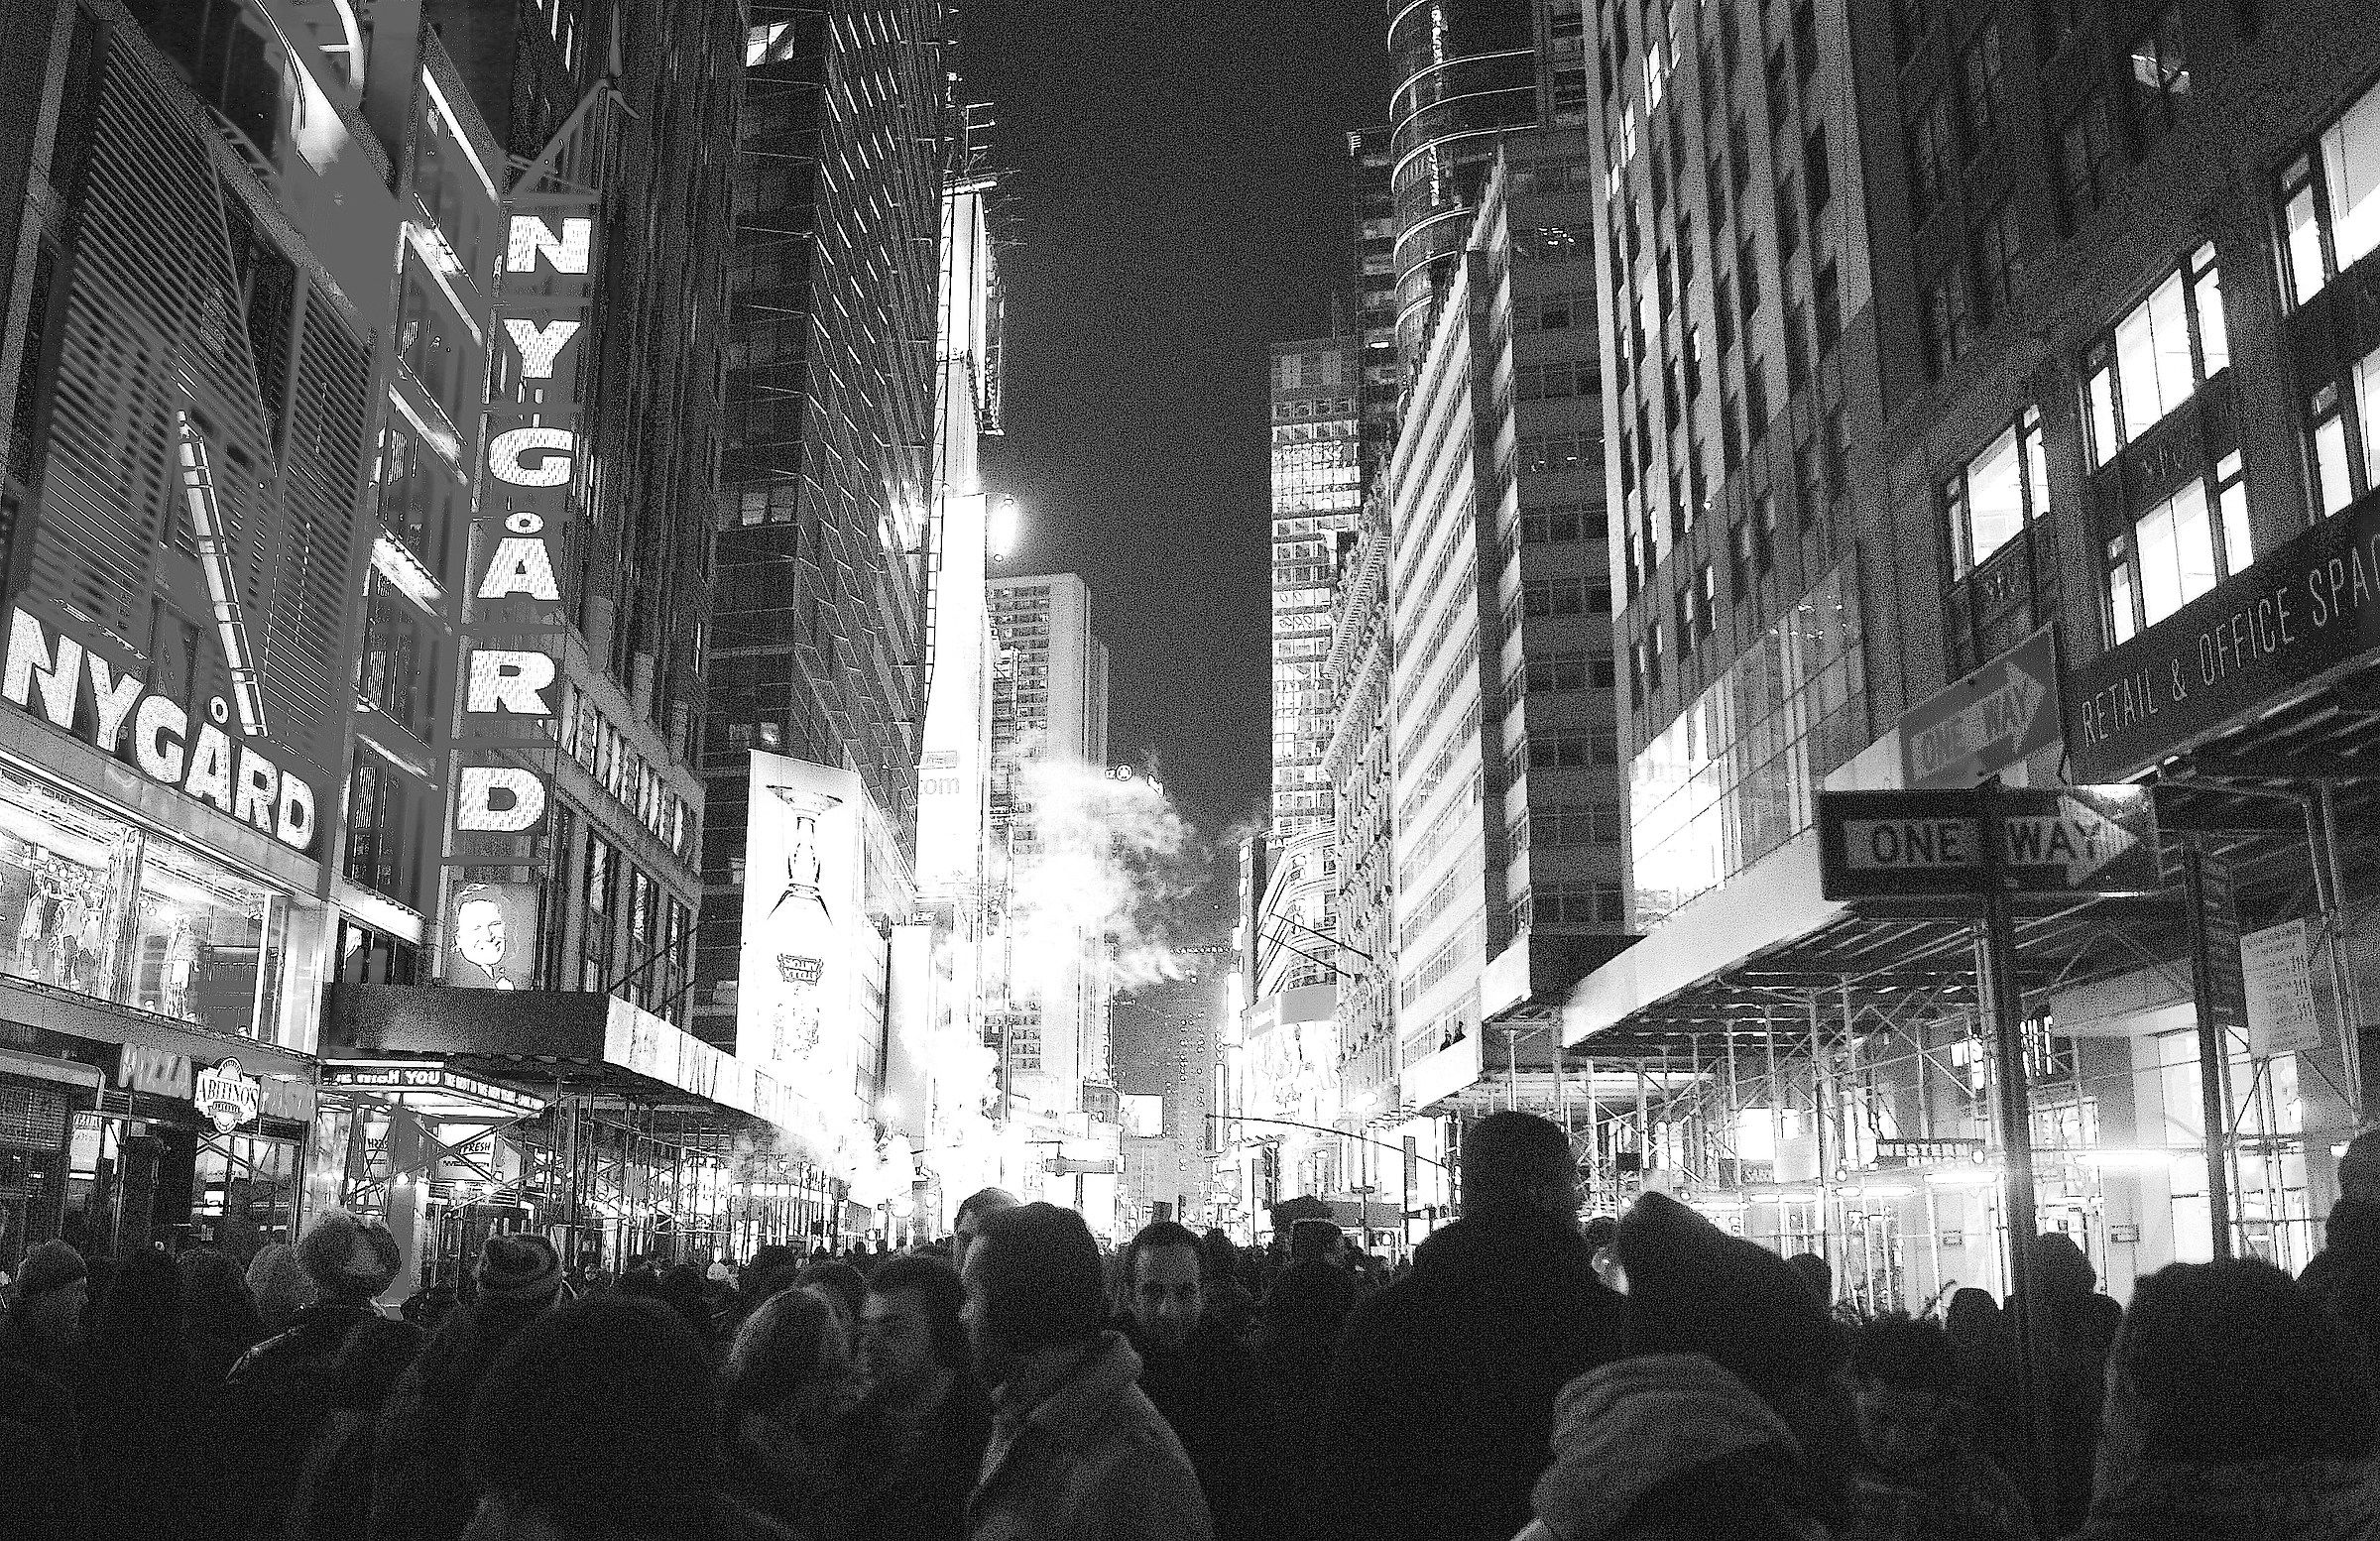 Time Square on December 31st...